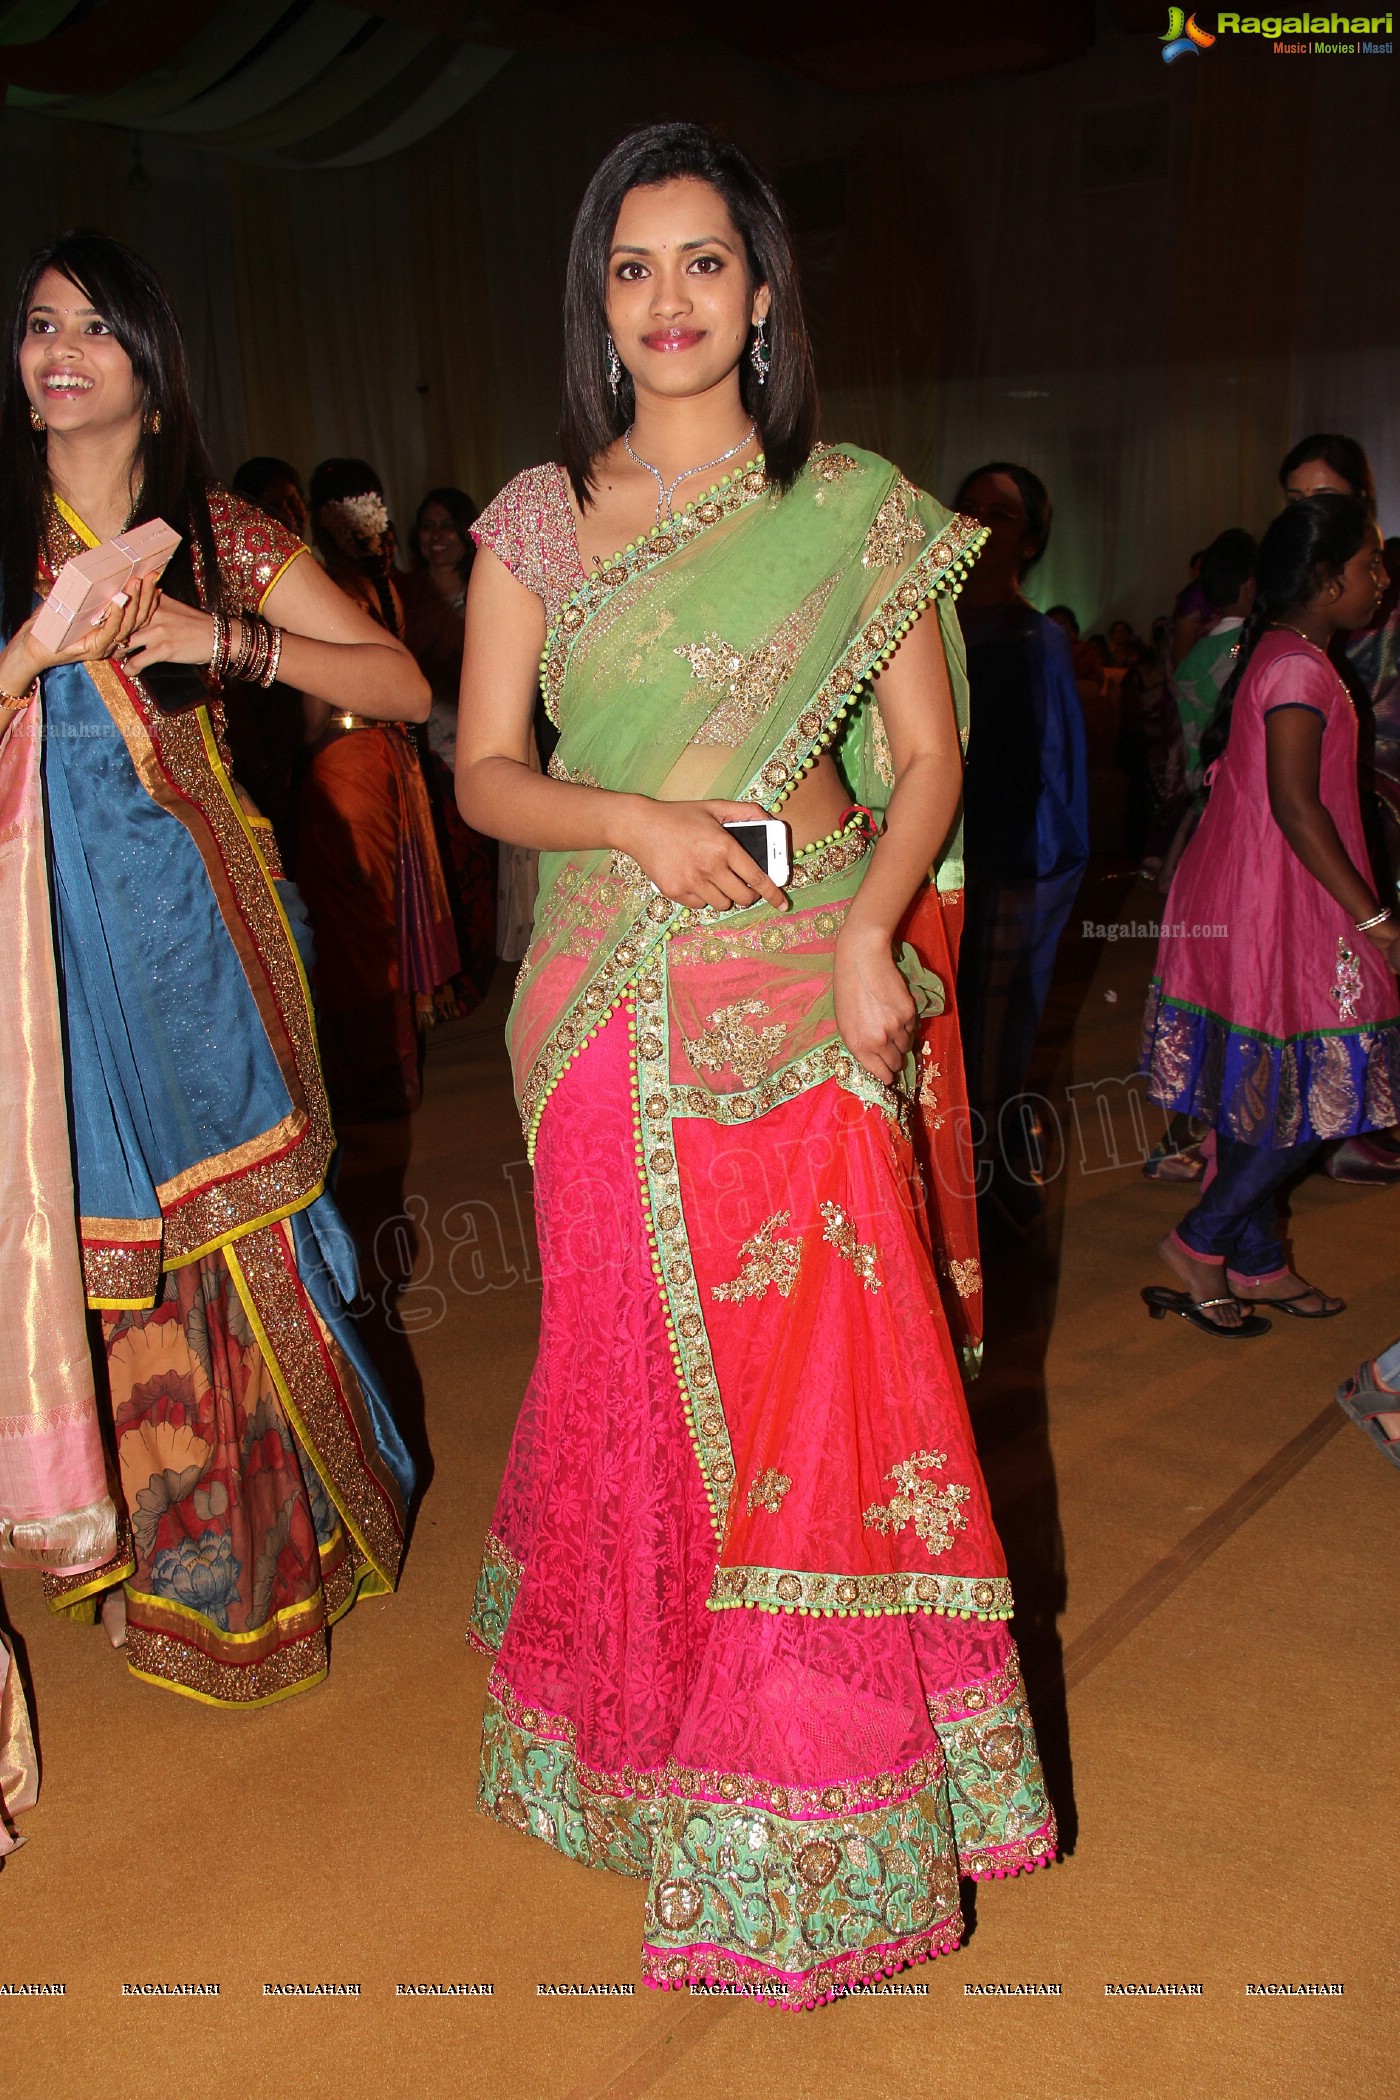 Sunny-Keerthi's Wedding at HITEX, Hyderabad